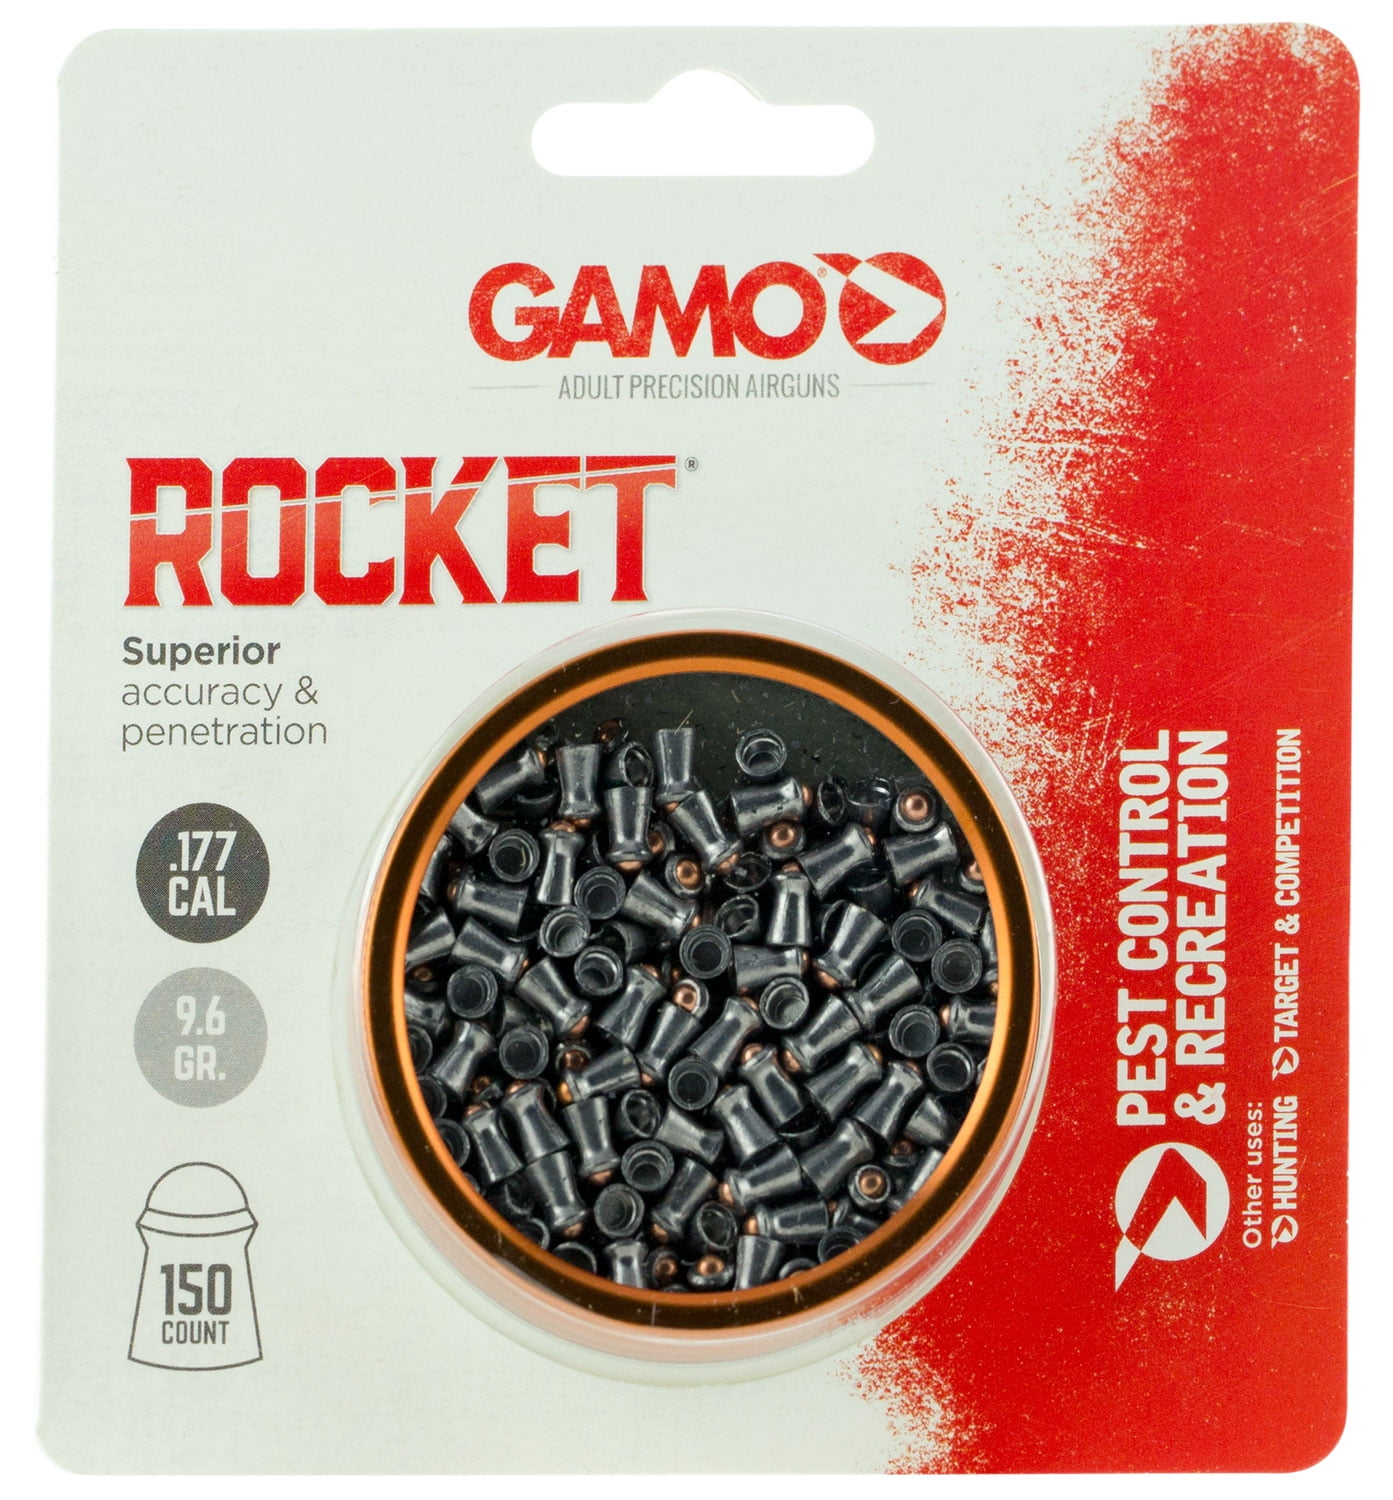 Gamo Rocket .177 Cal 9.6 Grains Ballistic Tip 150ct 632127454 for sale online 